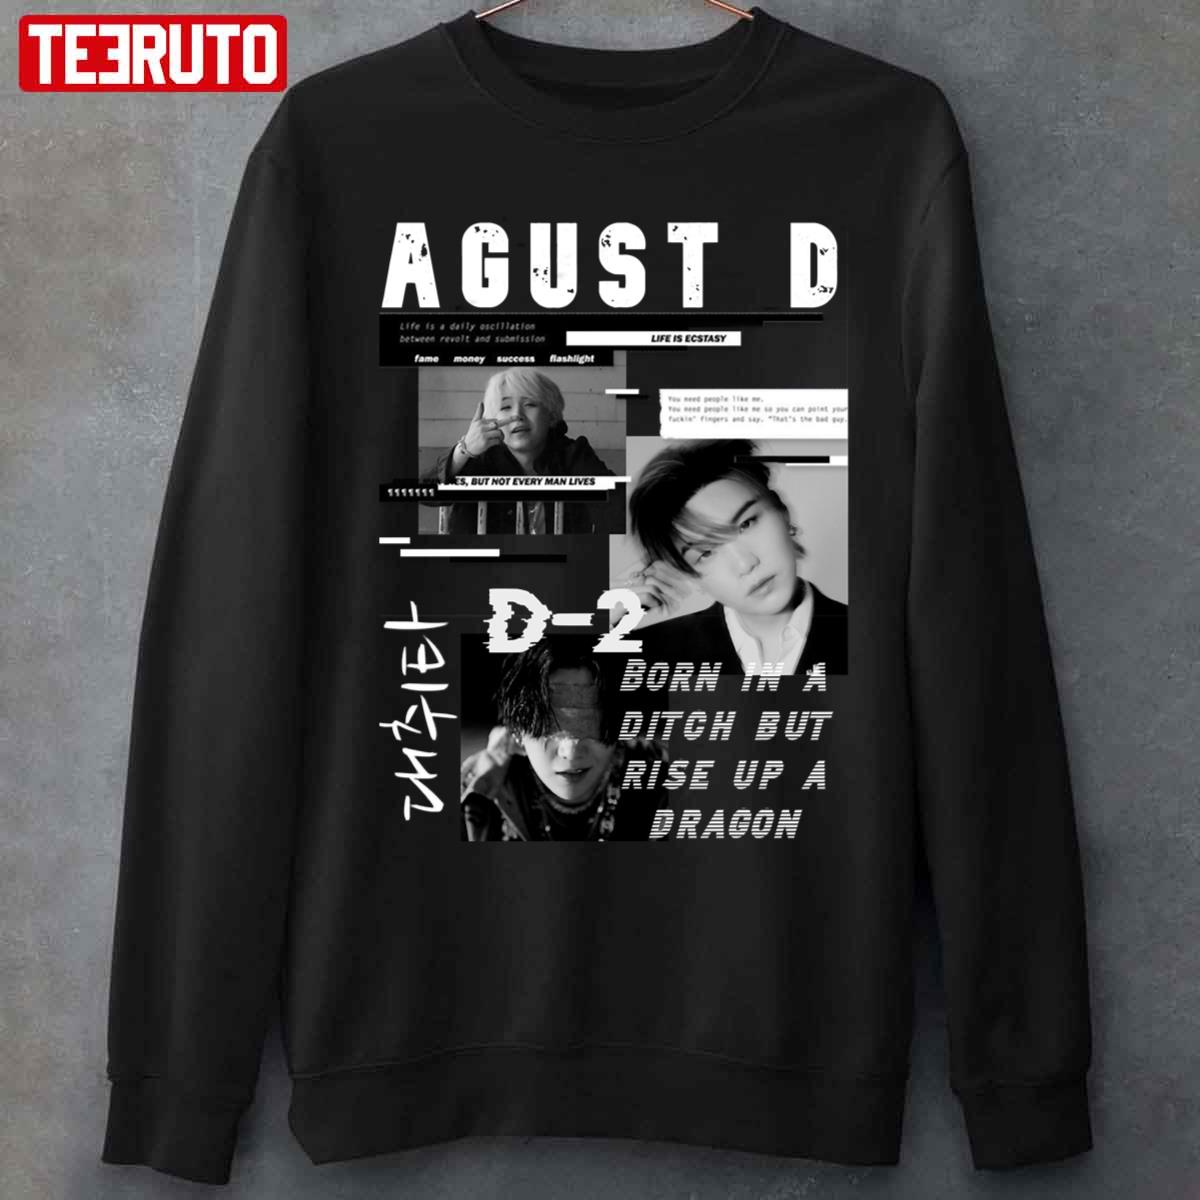 BTS SUGA Agust D Mixtapes Collage Design Unisex T-Shirt - Teeruto